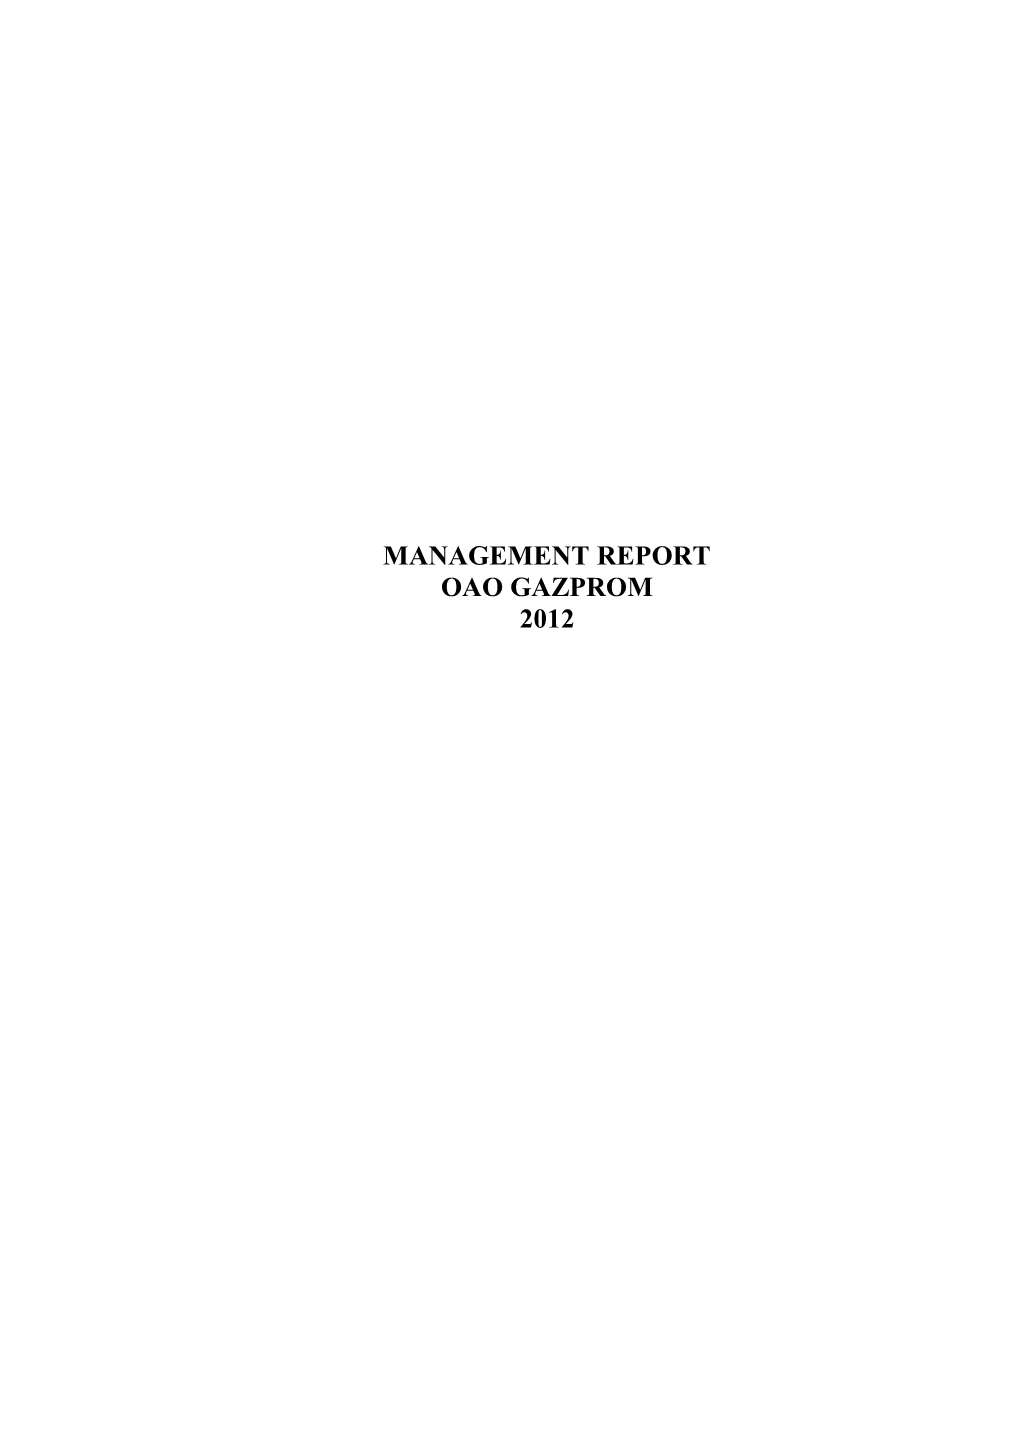 Management Report Oao Gazprom 2012